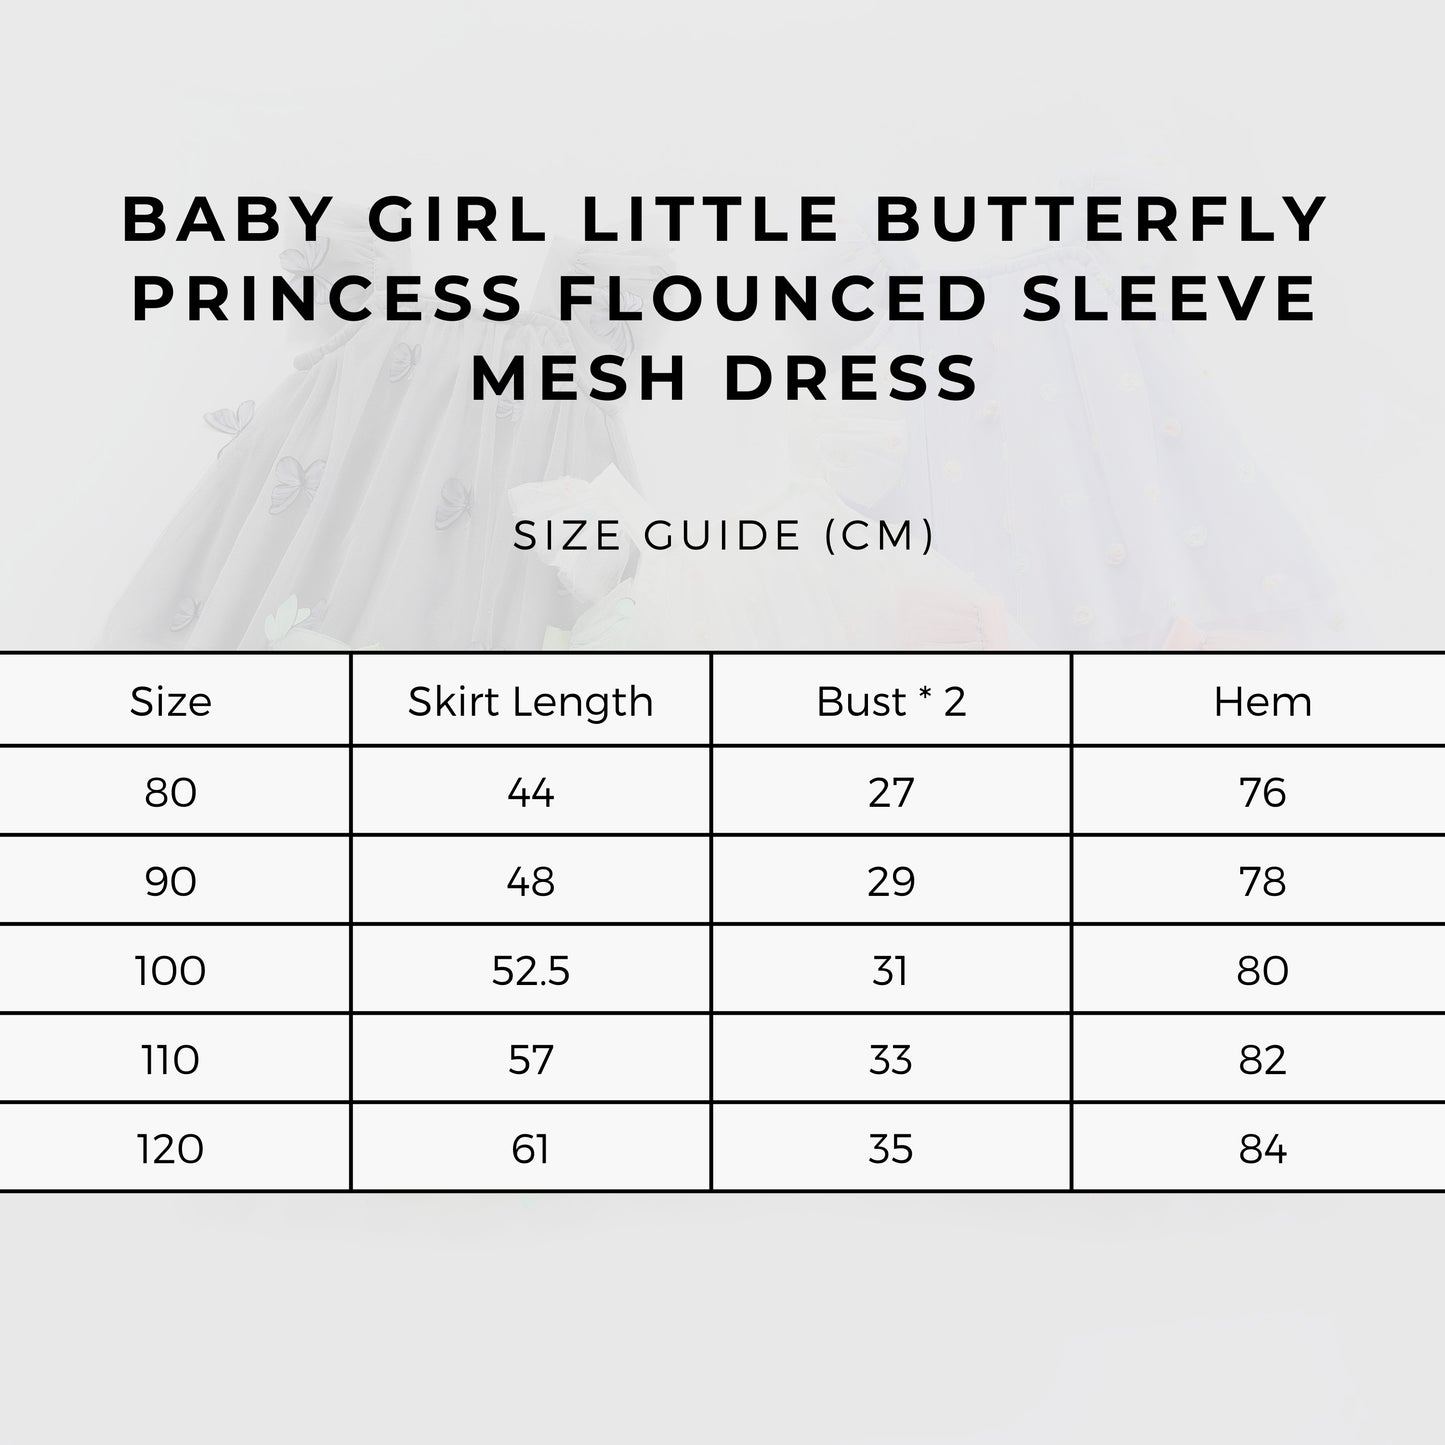 Baby Girl Little Butterfly Princess Flounced Sleeve Mesh Dress size